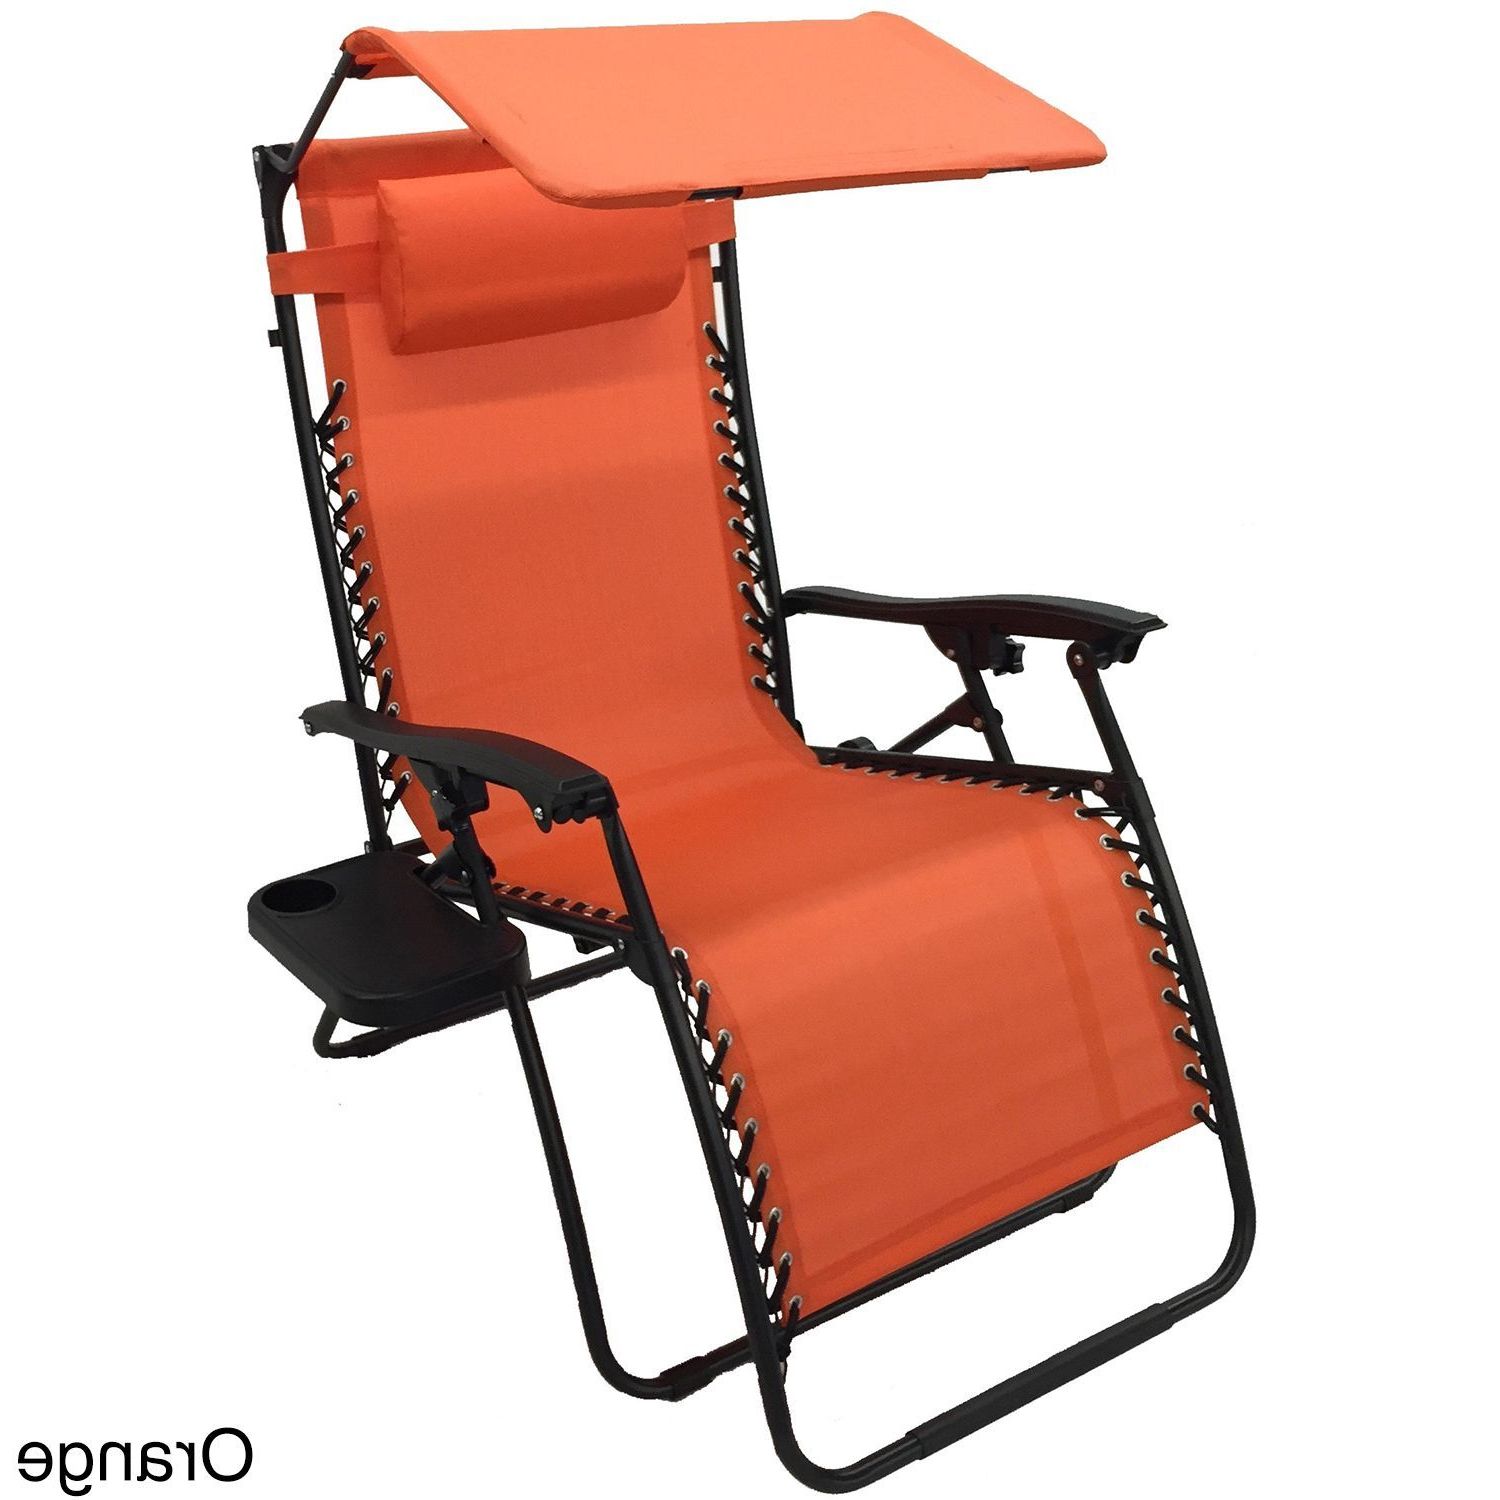 Mesh Fabric With Steel Frame Zero Gravity Chair With Canopy Within Popular Mesh Fabric With Steel Frame Chairs With Canopy And Tray (View 2 of 25)